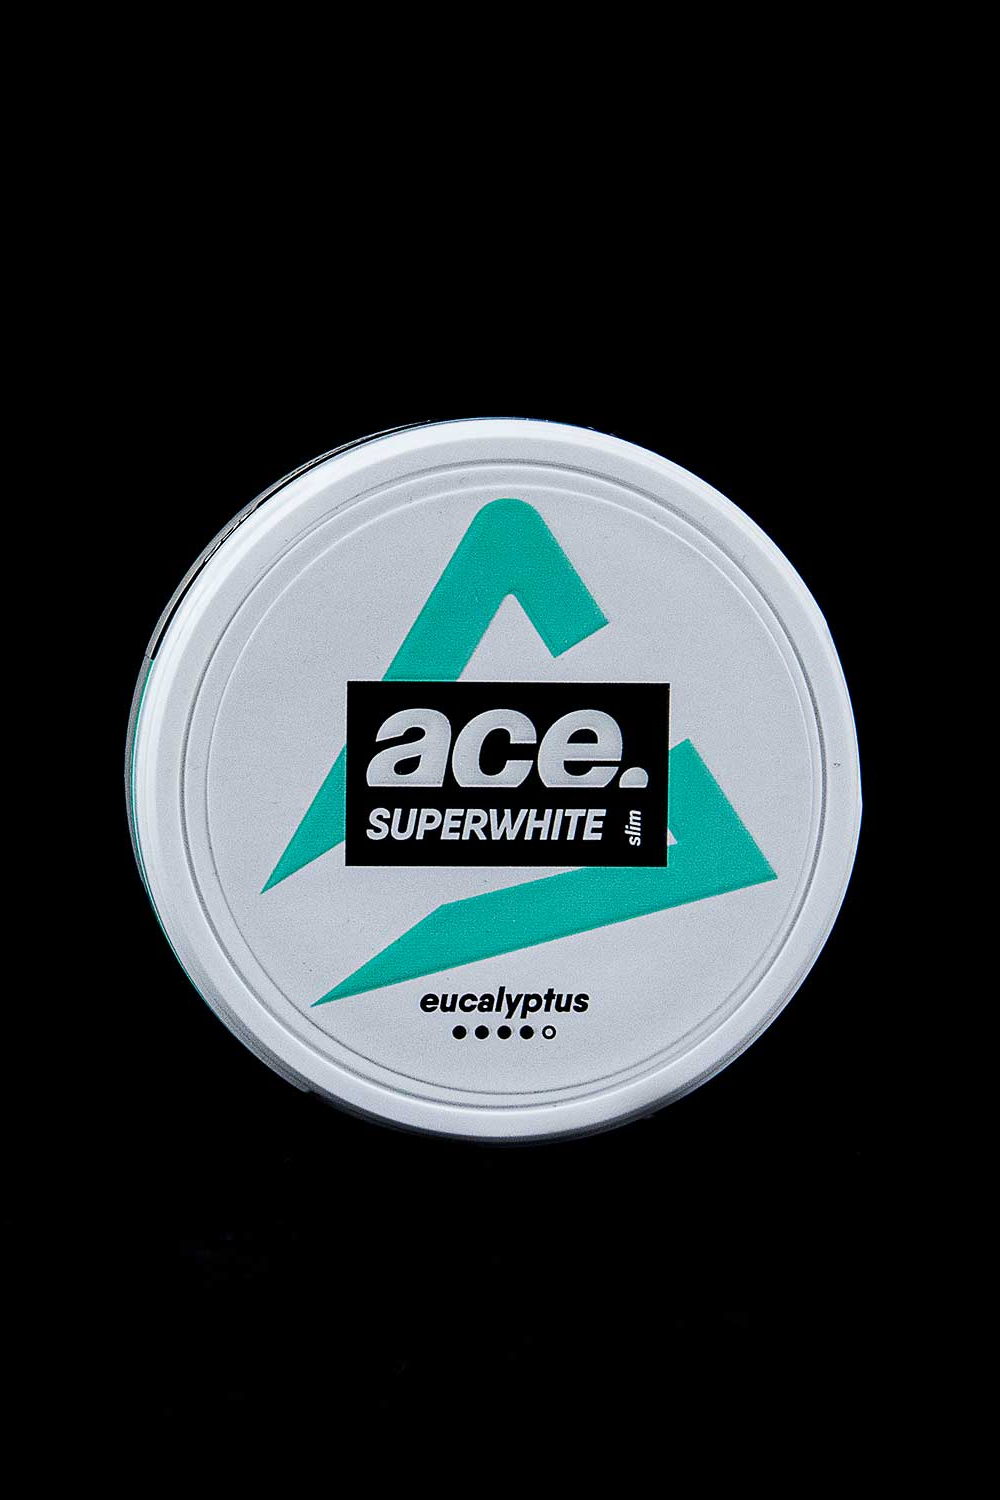 Ace Superwhite Eucalyptus snus